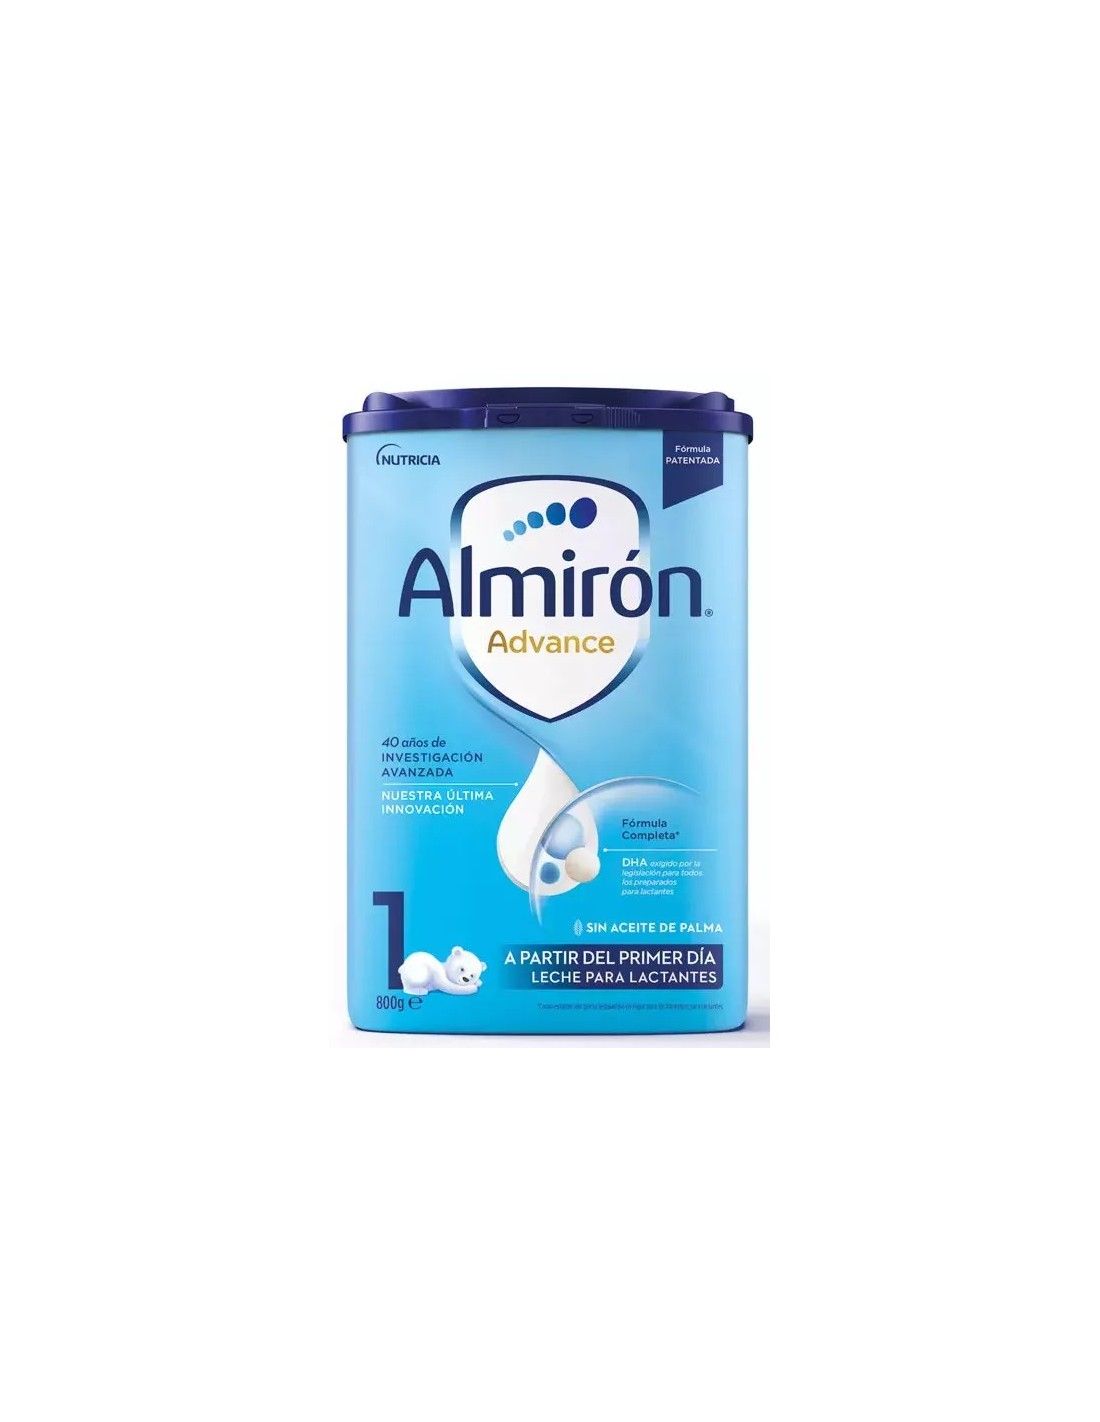 Almiron Advance 1 800 gr